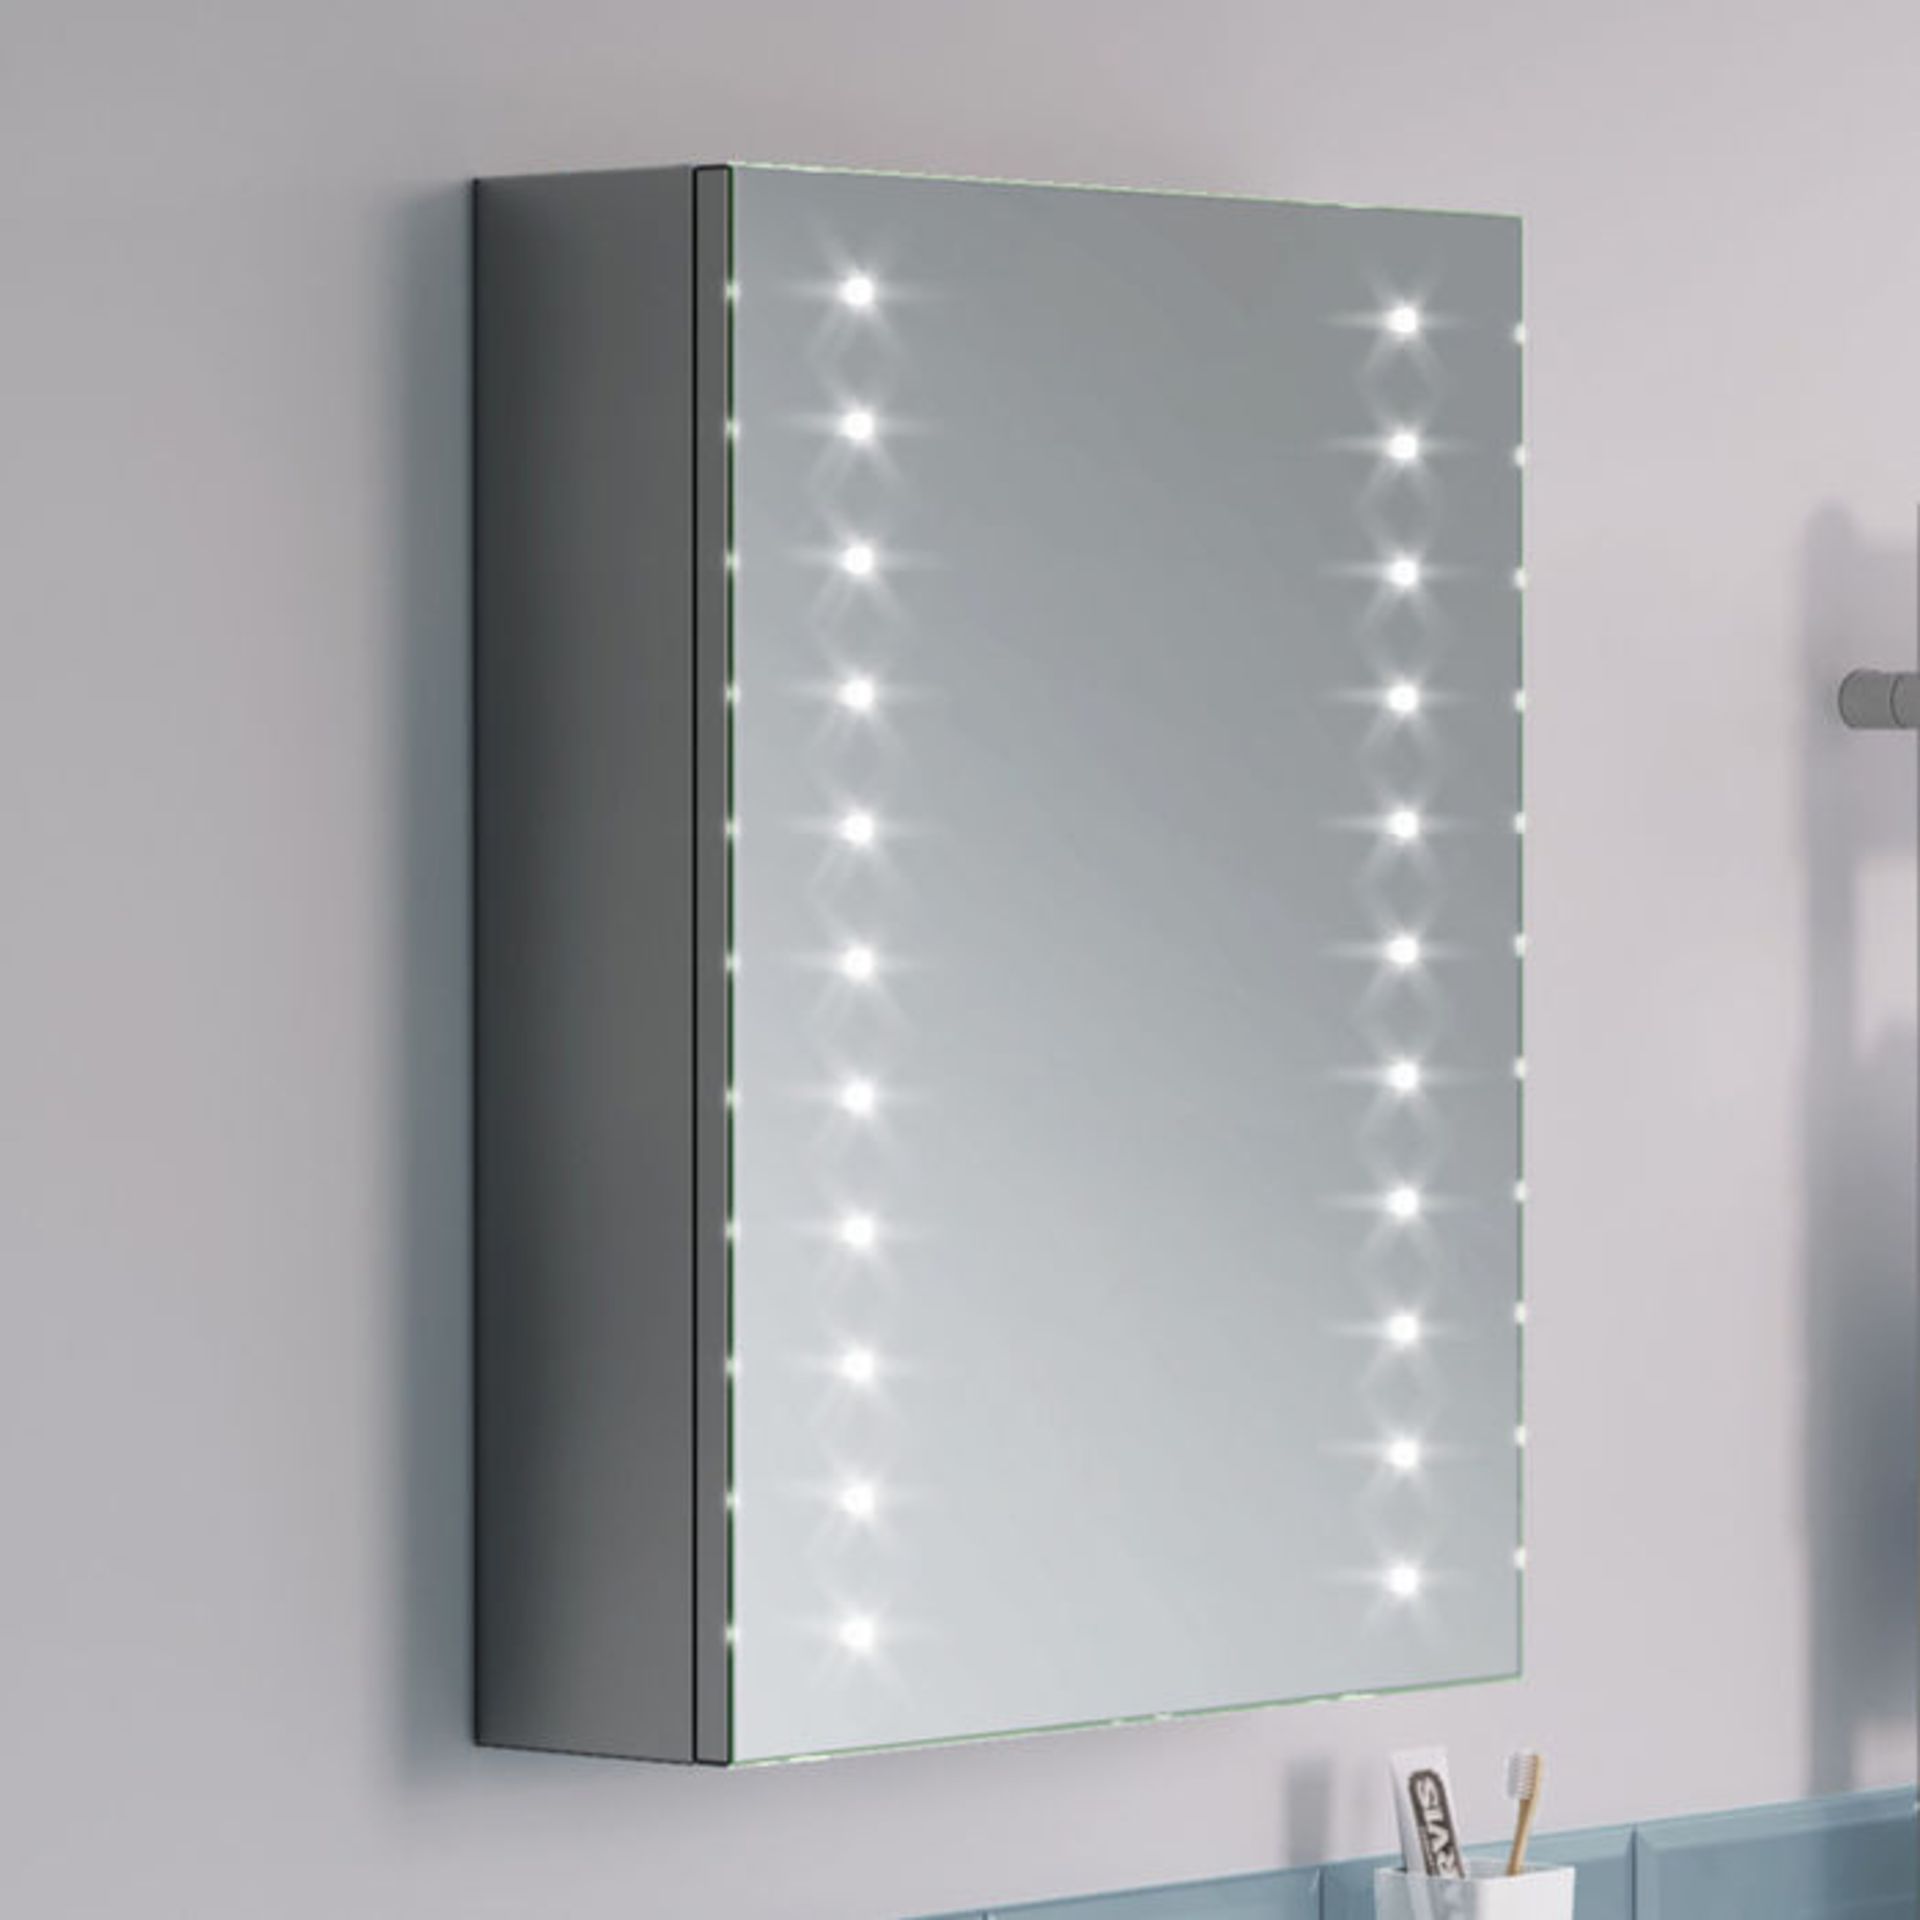 (ZL26) 450x600mm Galactic Illuminated LED Mirror Cabinet - Shaver Socket. RRP £399.99. We love - Image 2 of 4